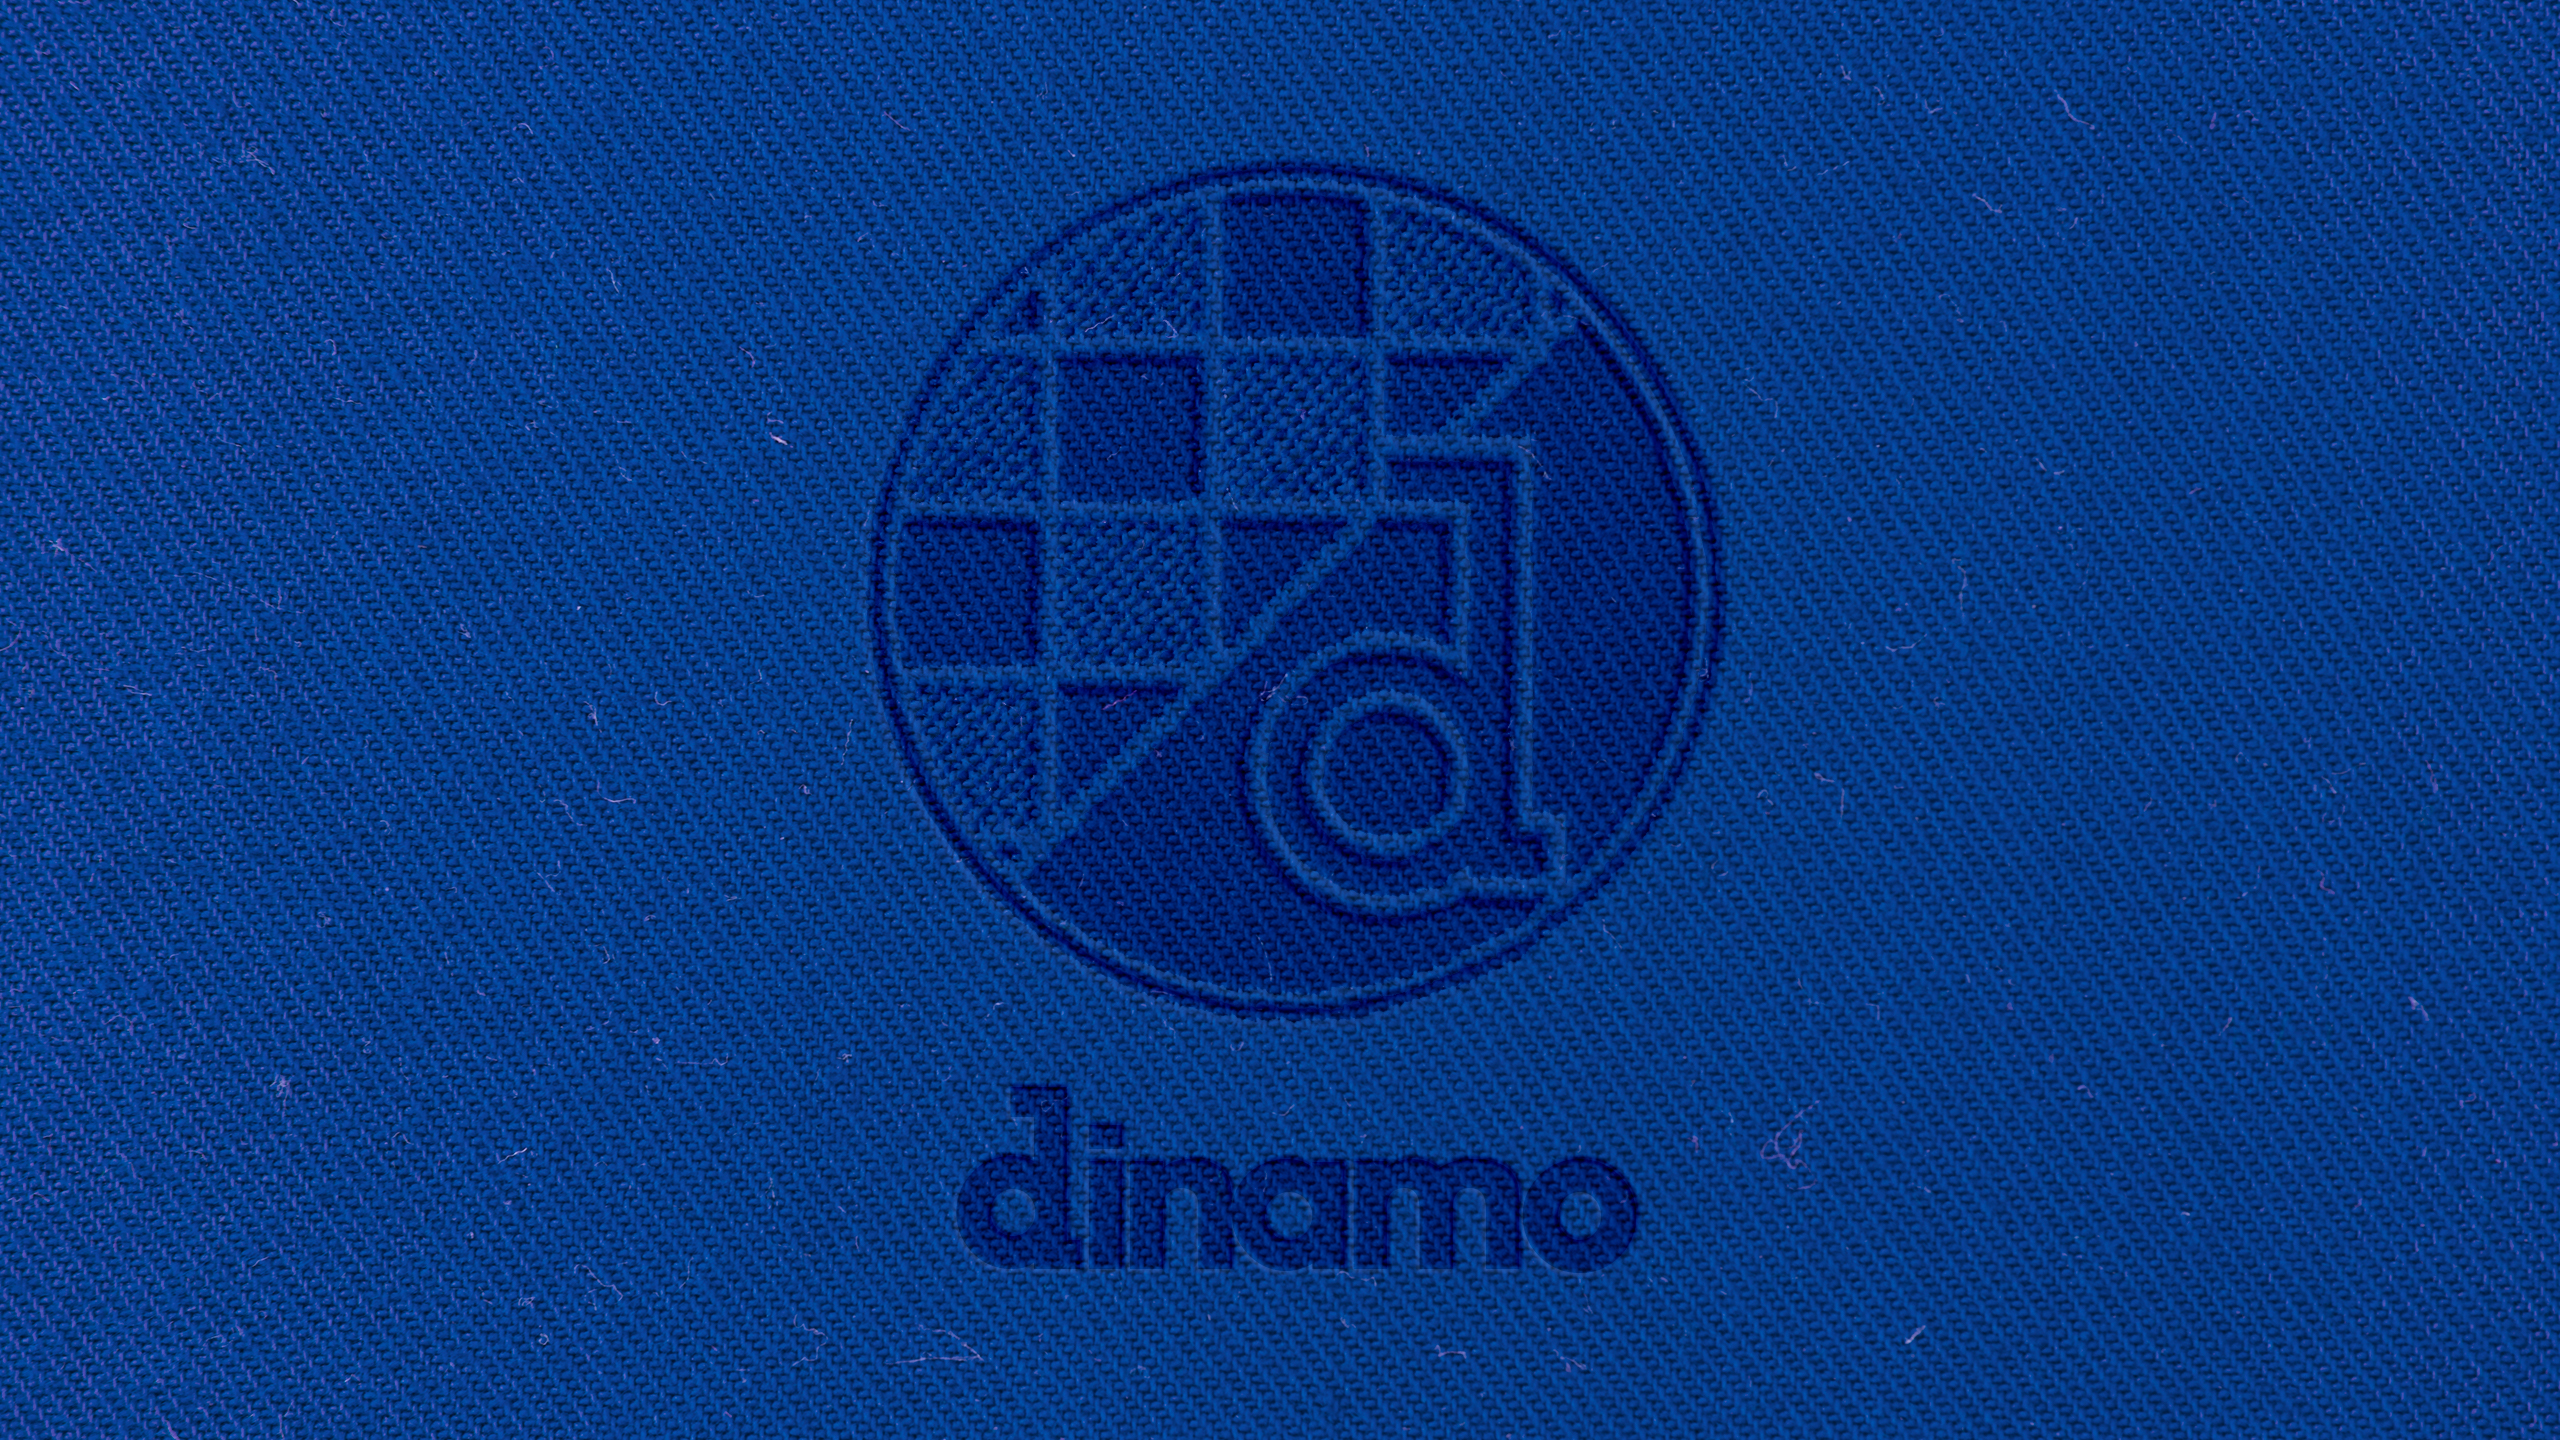 Dinamo wallpaper